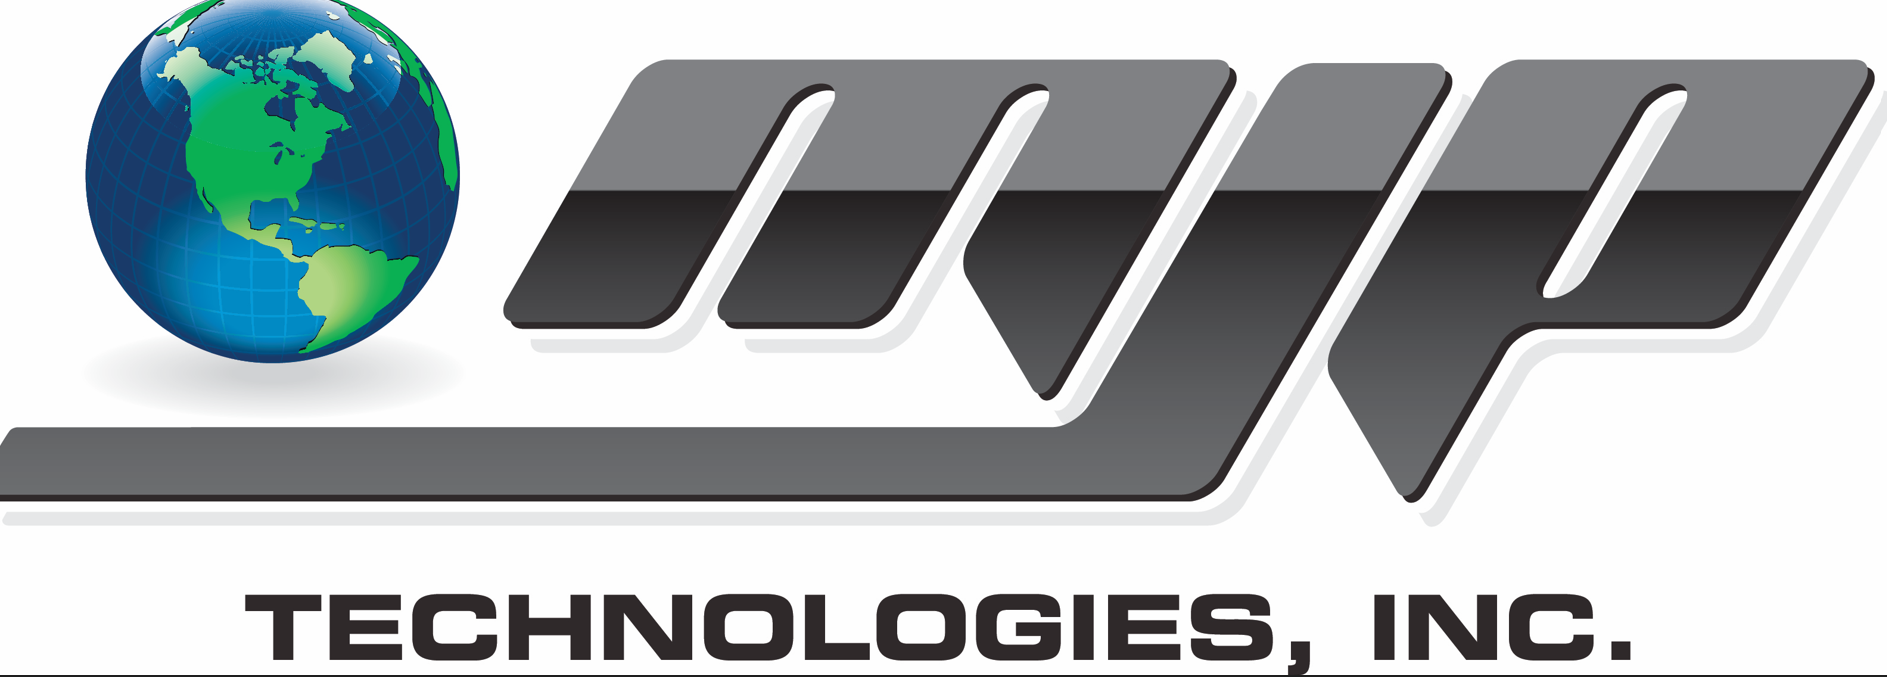 MJP Technologies logo